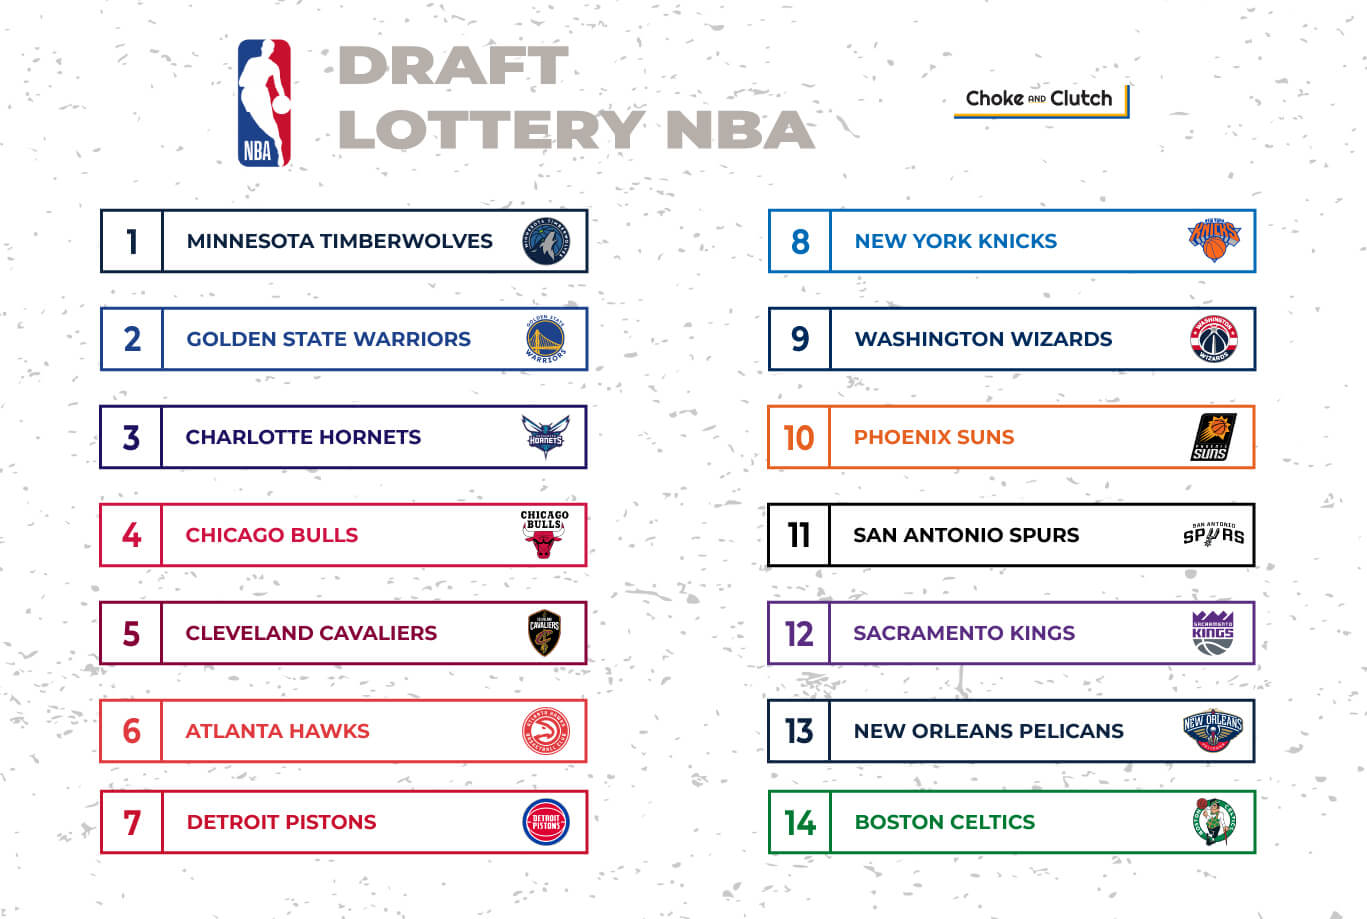 Résultat de la lottery draft NBA 2020